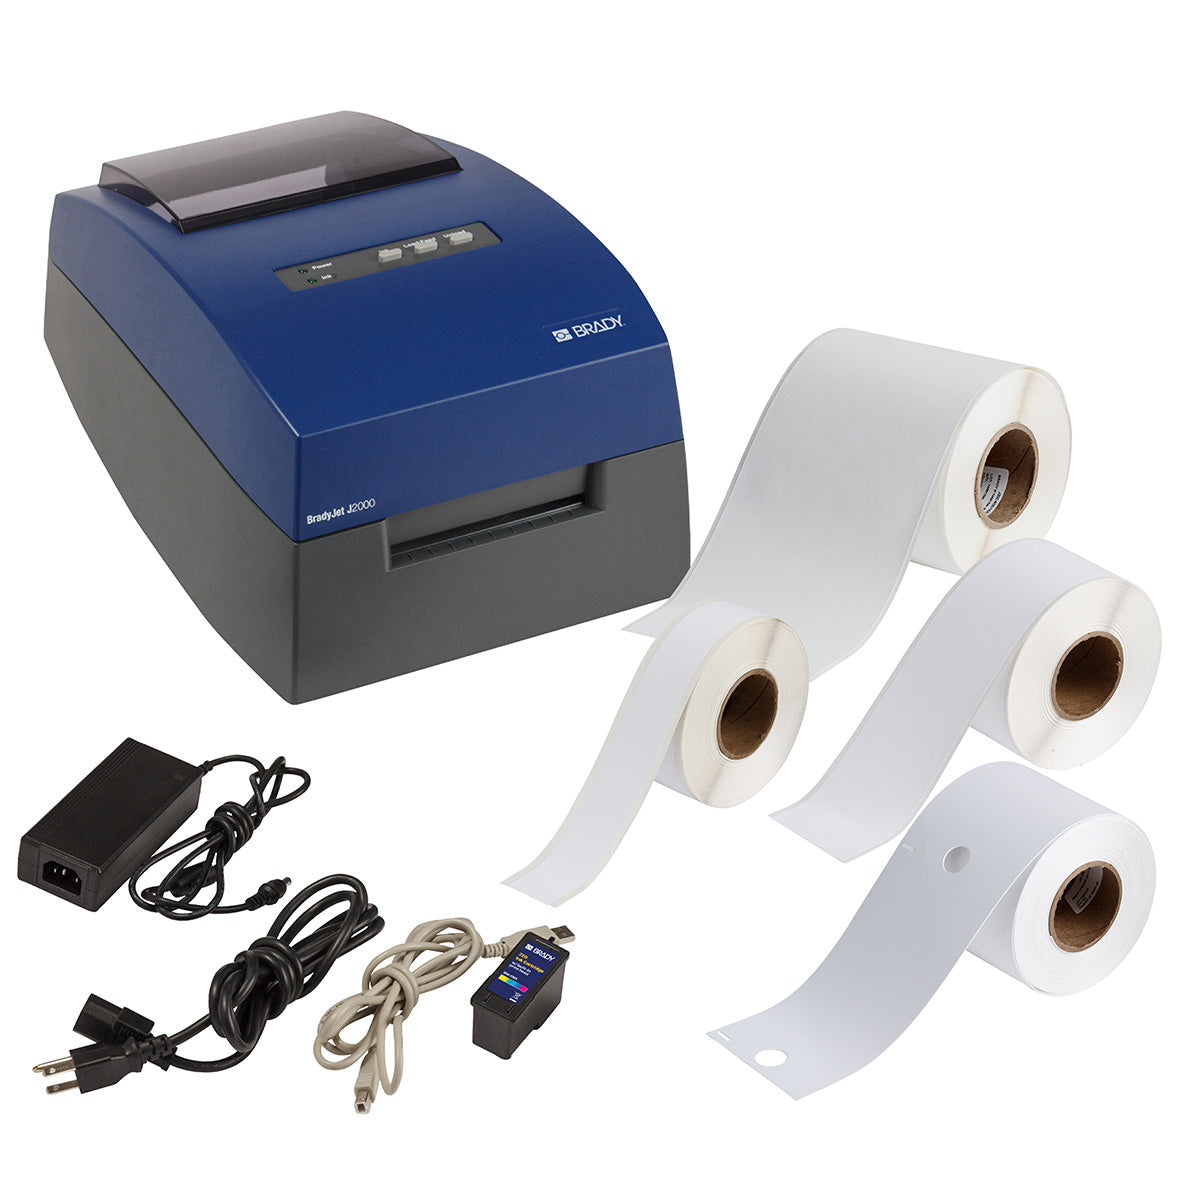 BradyJet J2000 Safety ID Label and Printer Kit - Up to 15% Savings Versus Purchased Separately